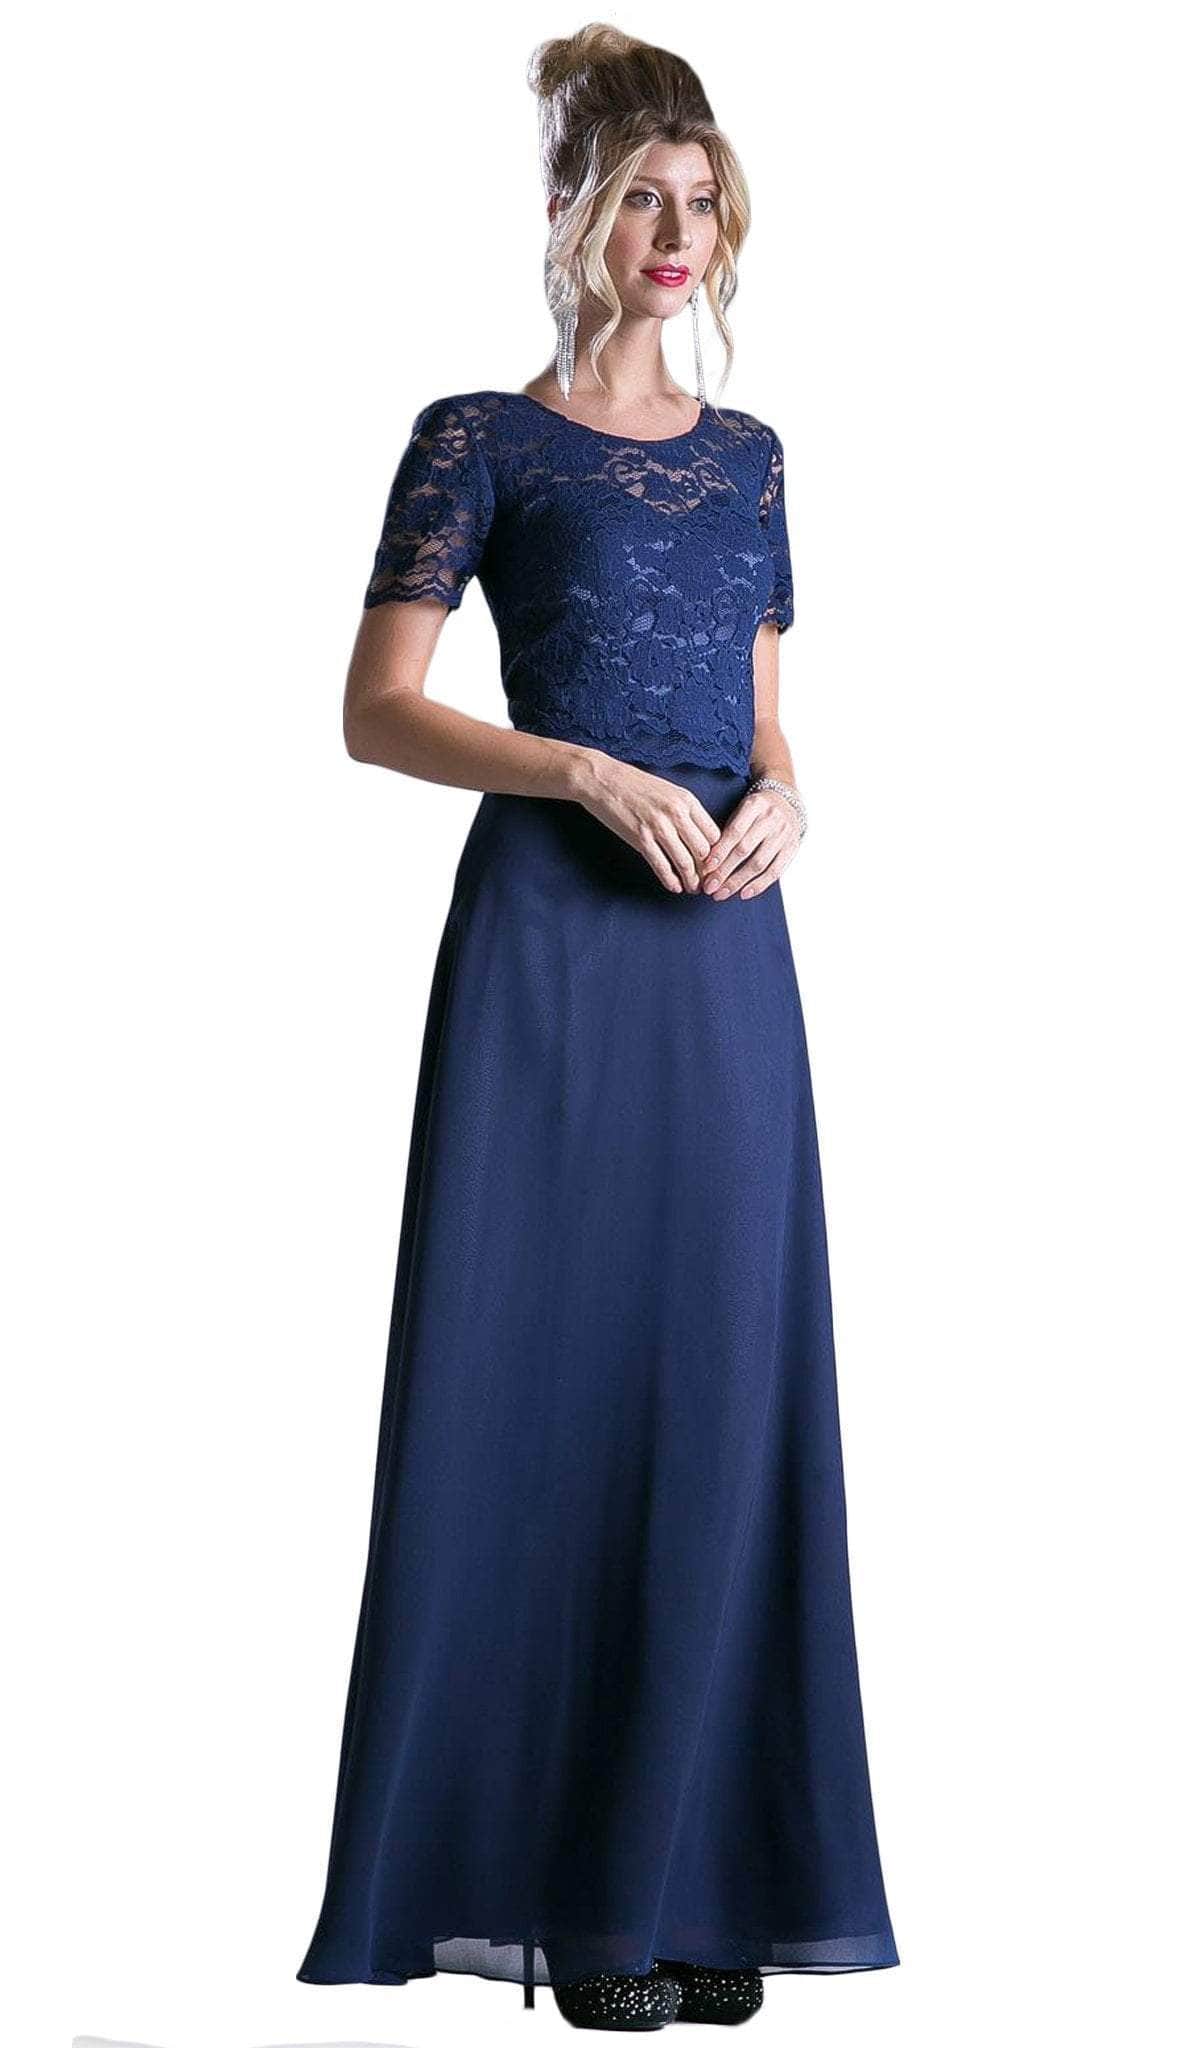 Ladivine CF160 - Lace Bodice Mock Two-Piece Dress
